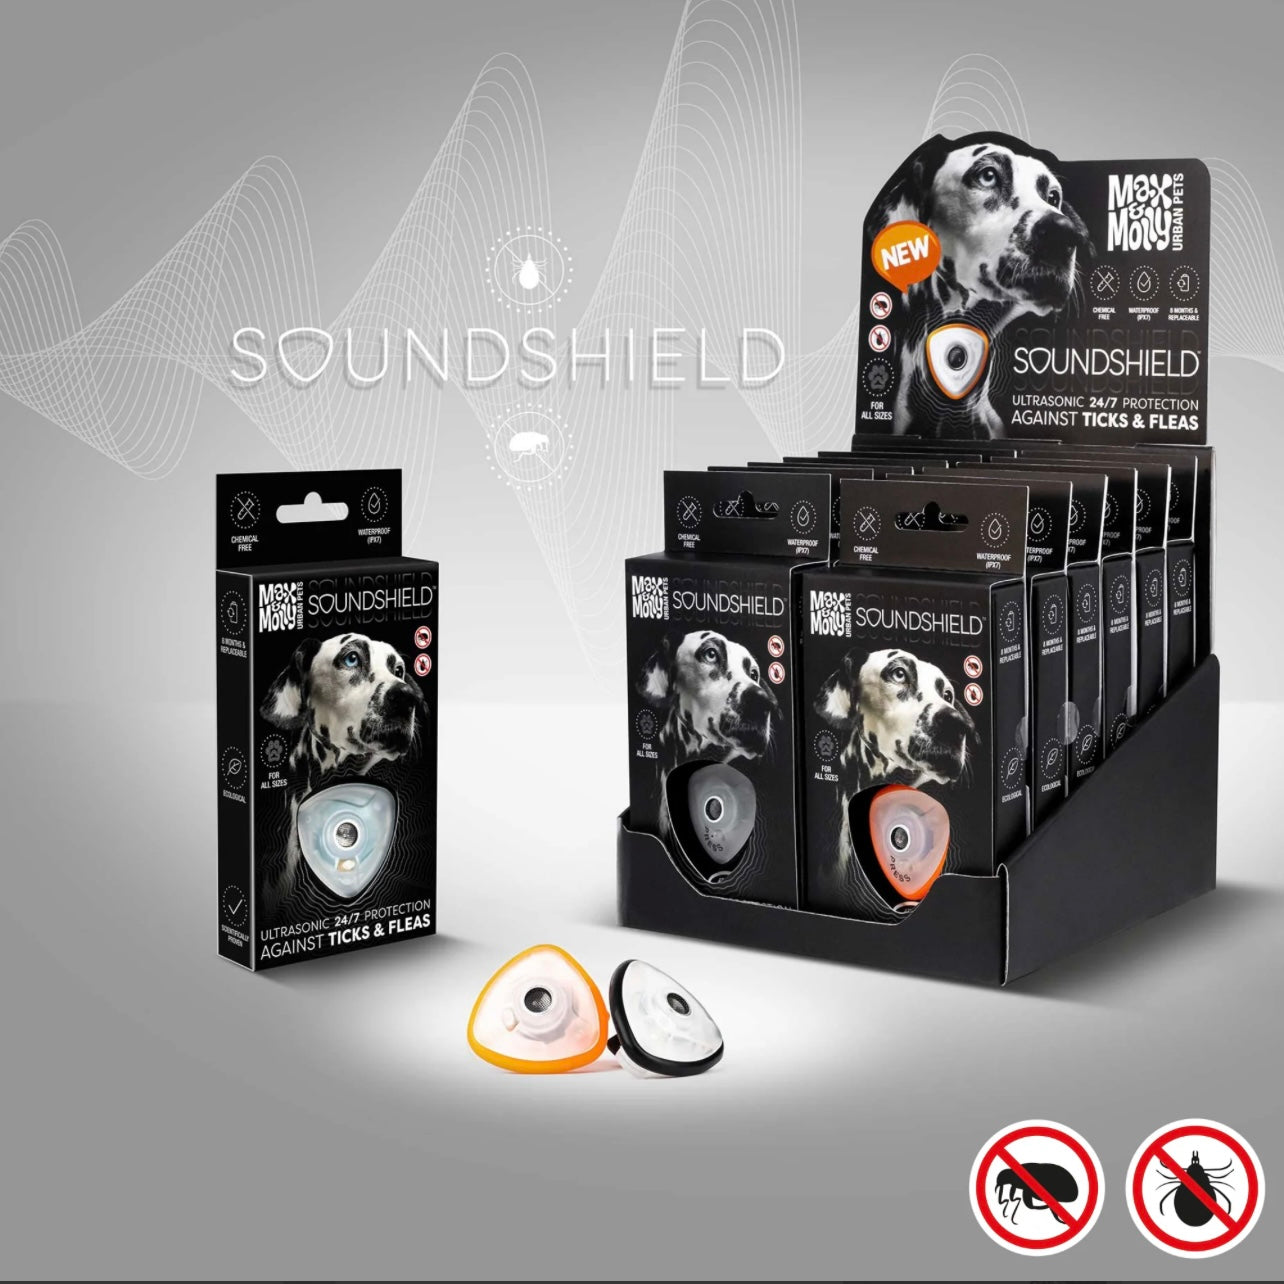 Soundshield - 24/7 Ultrasonic Technology Against Ticks & Fleas - Black (8282345472280)